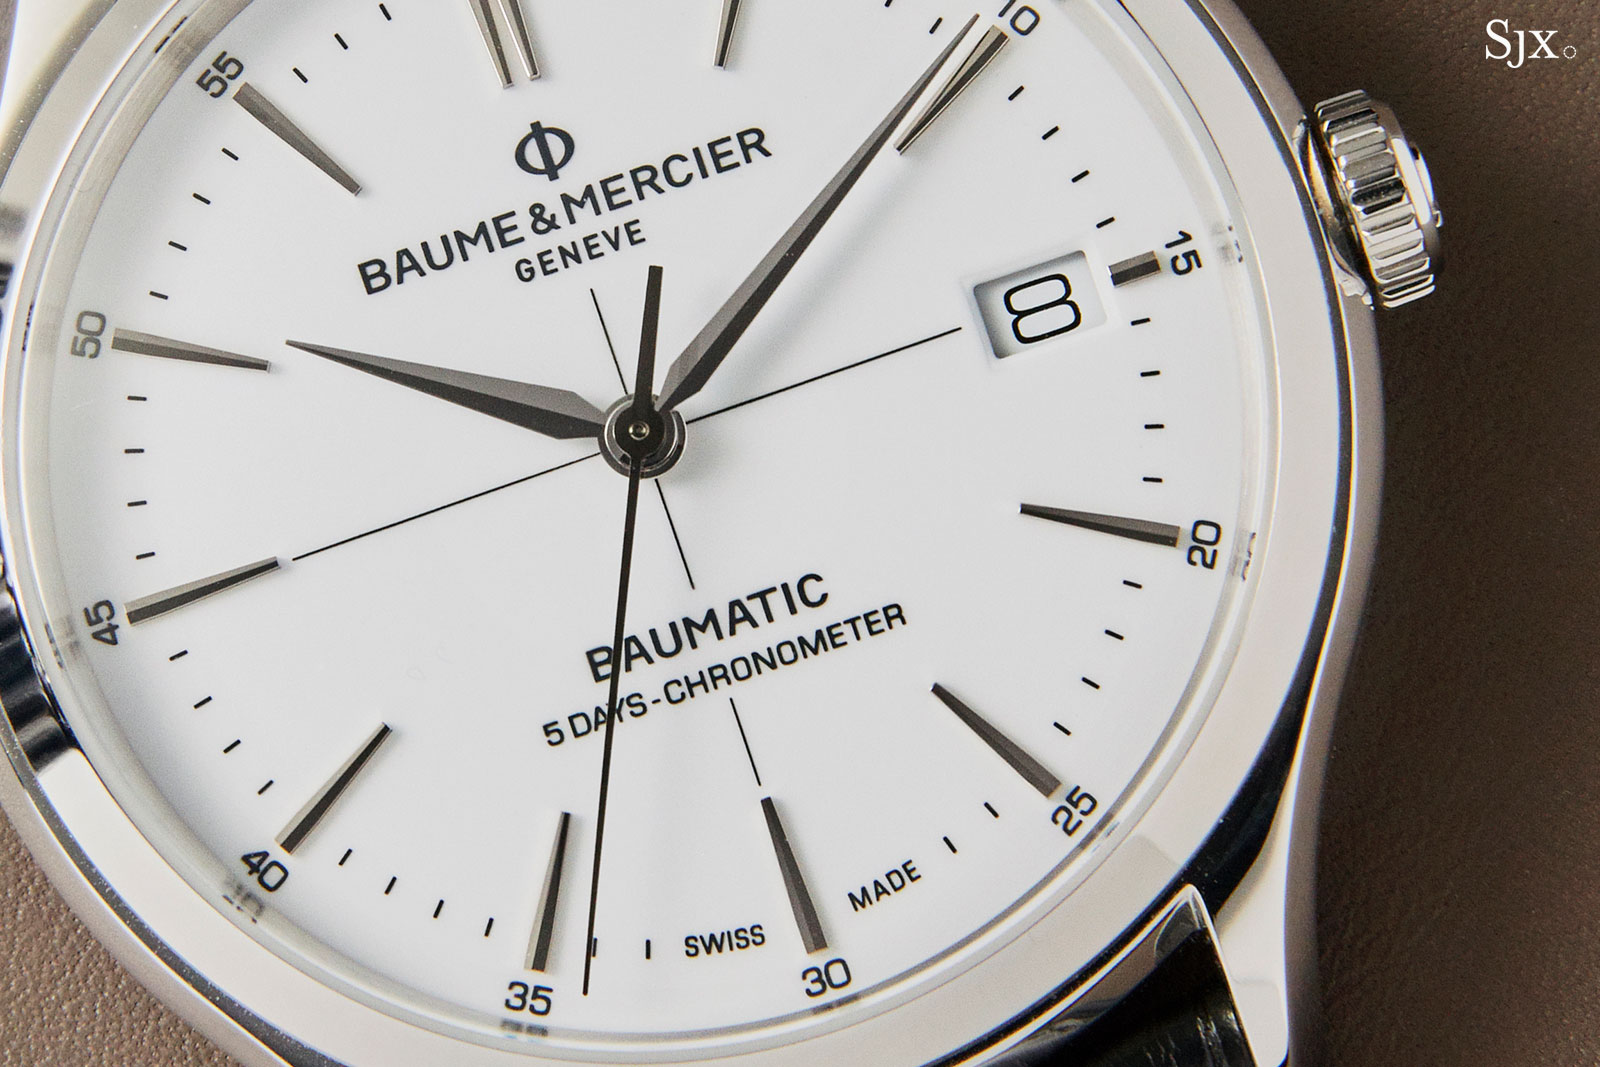 Baume Mercier Baume & Mercier Baumatic COSC chronometer 3